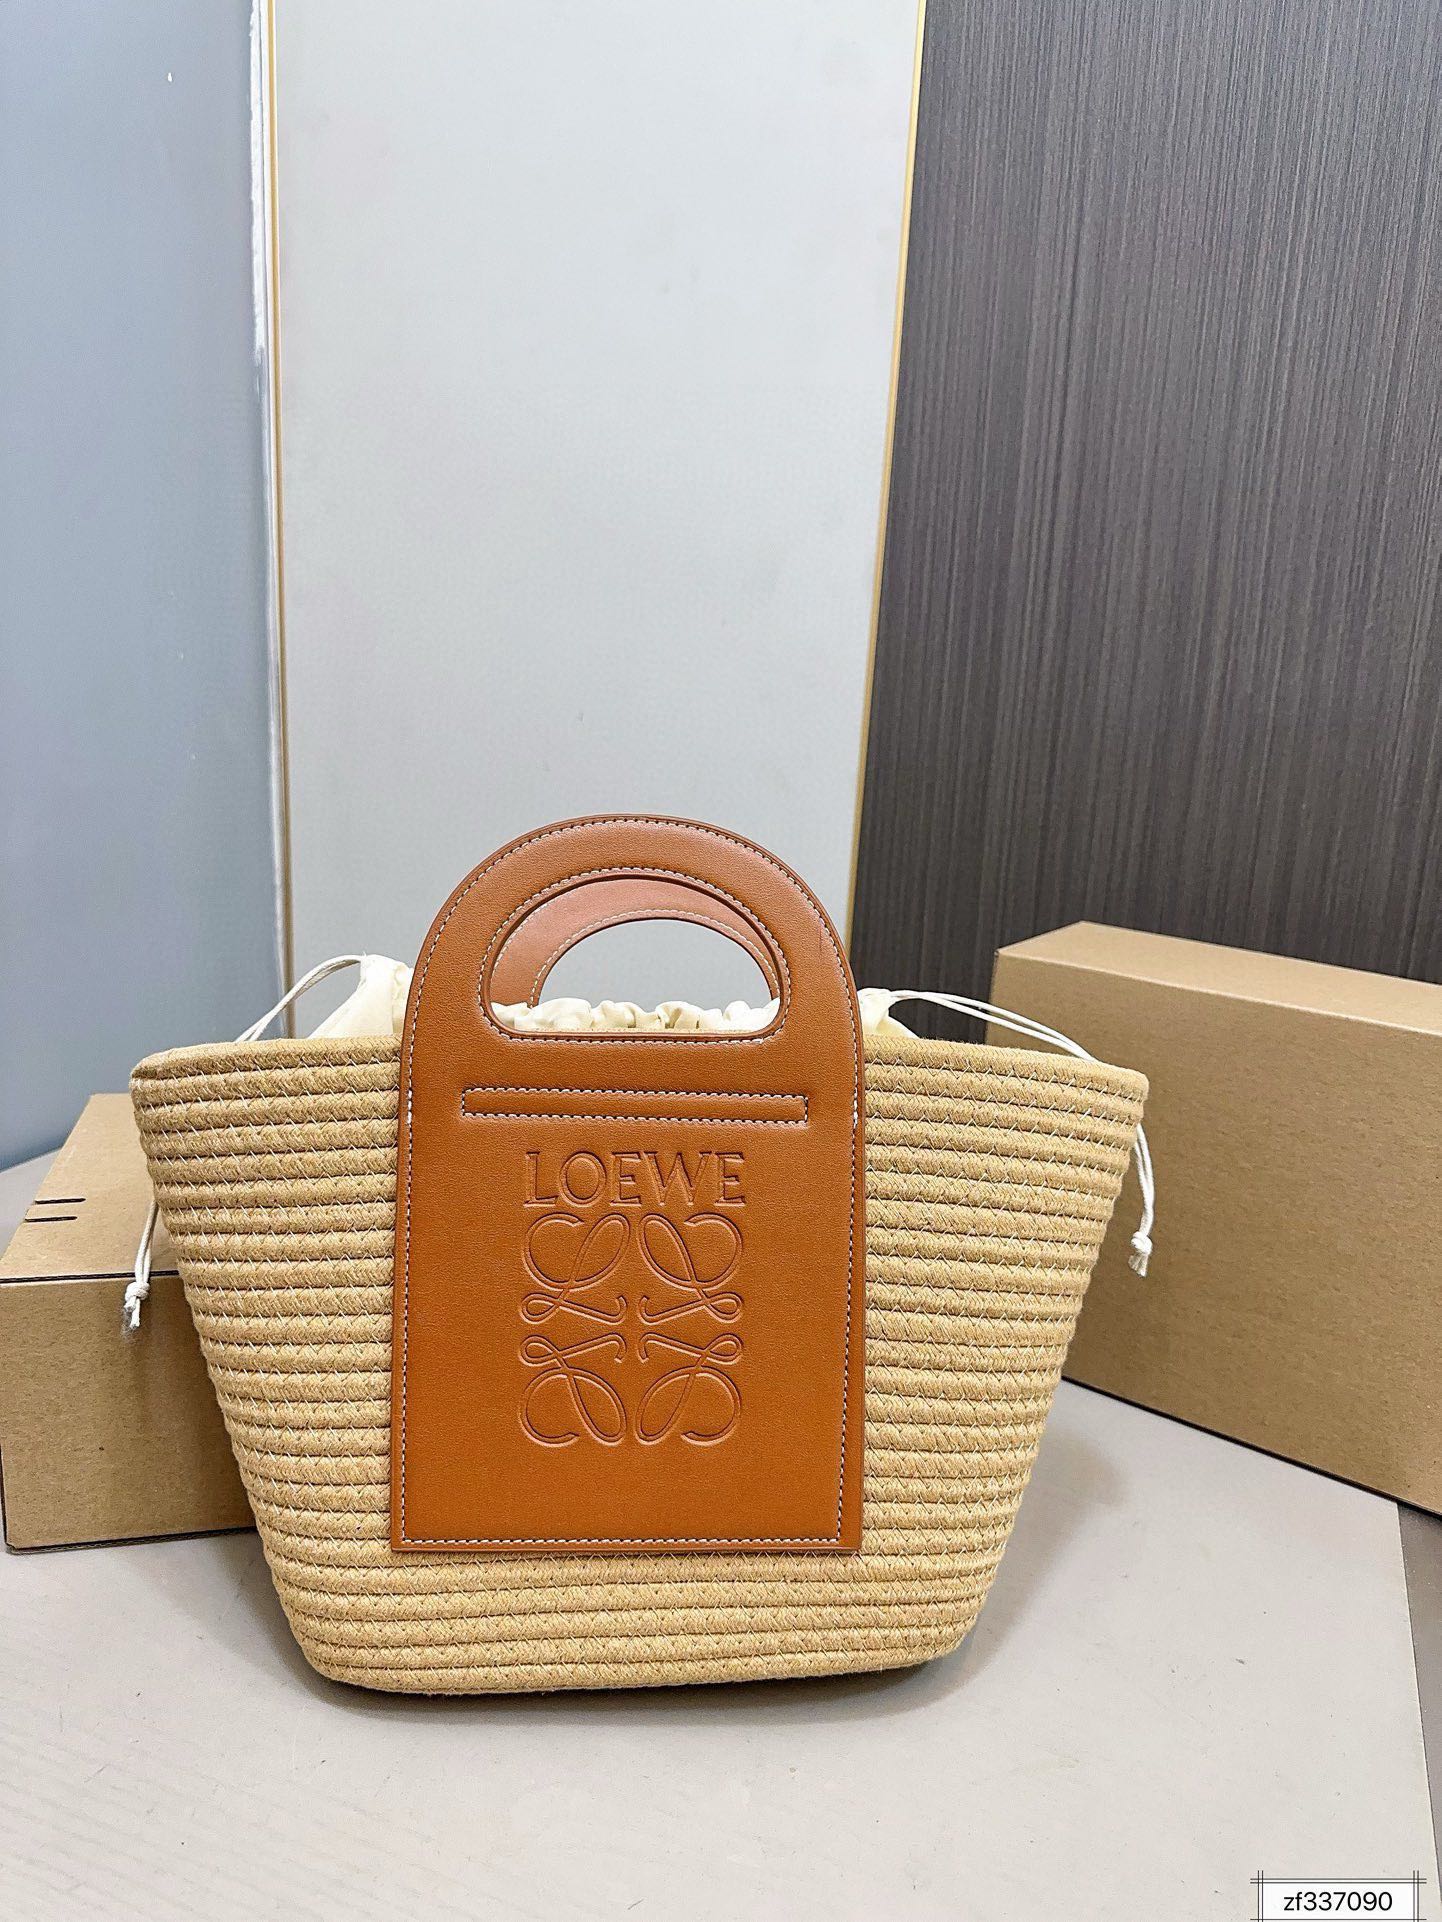 Loewe Bags Handbags Raffia Straw Woven Summer Collection Fashion